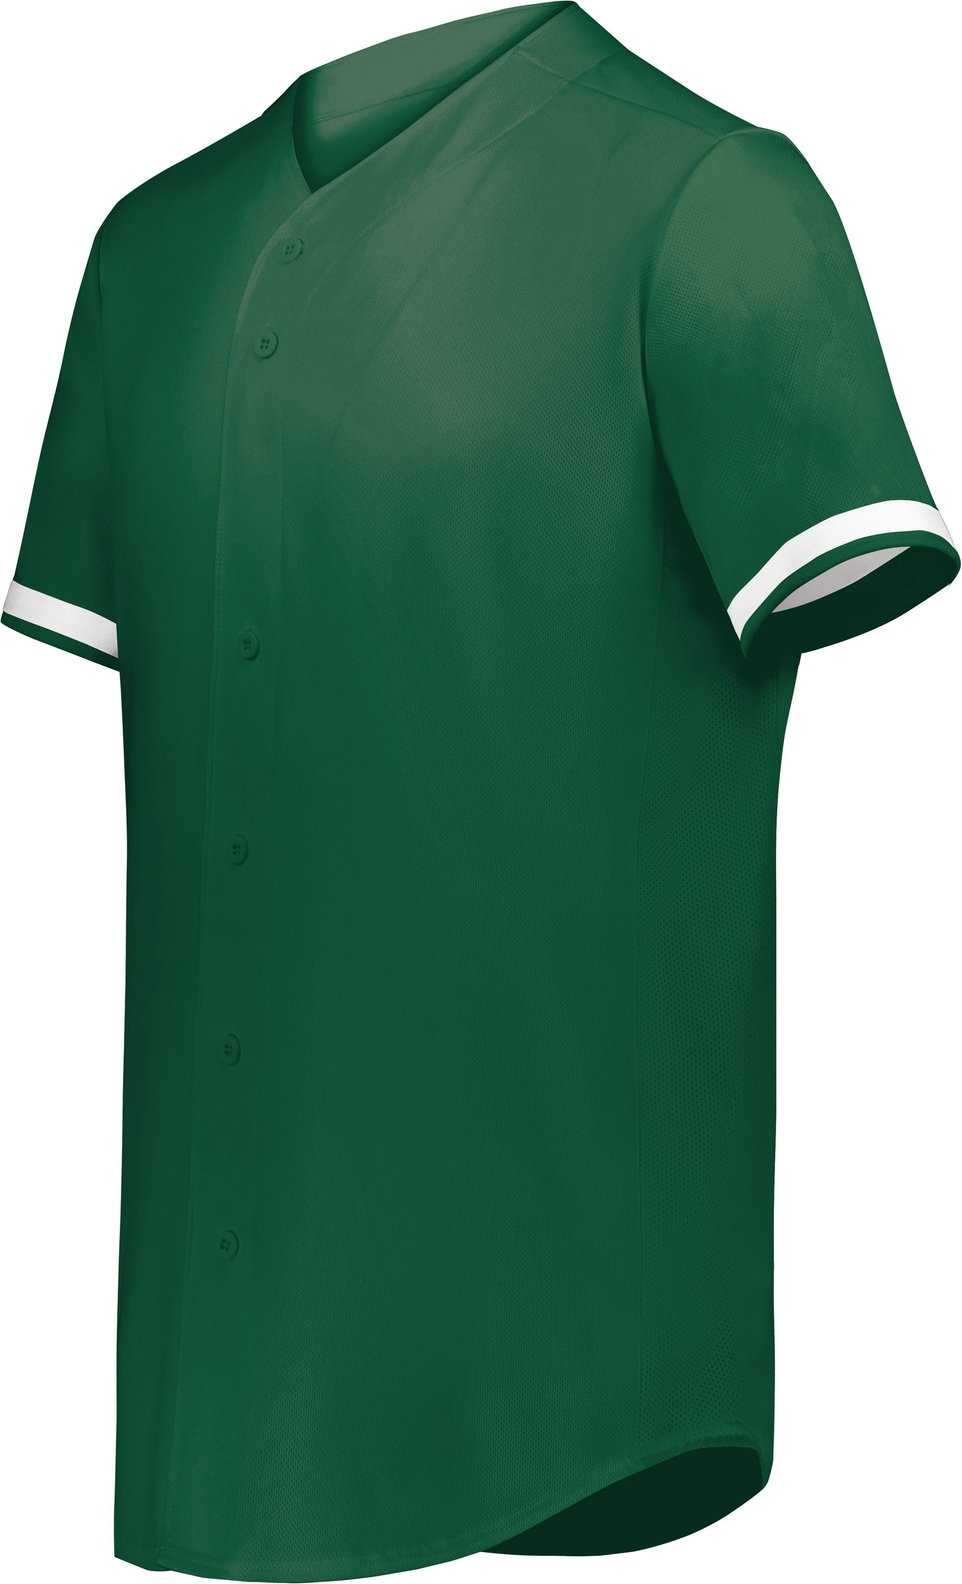 Augusta 6910 Youth Cutter+ Full Button Baseball Jersey - Dark Green White - HIT a Double